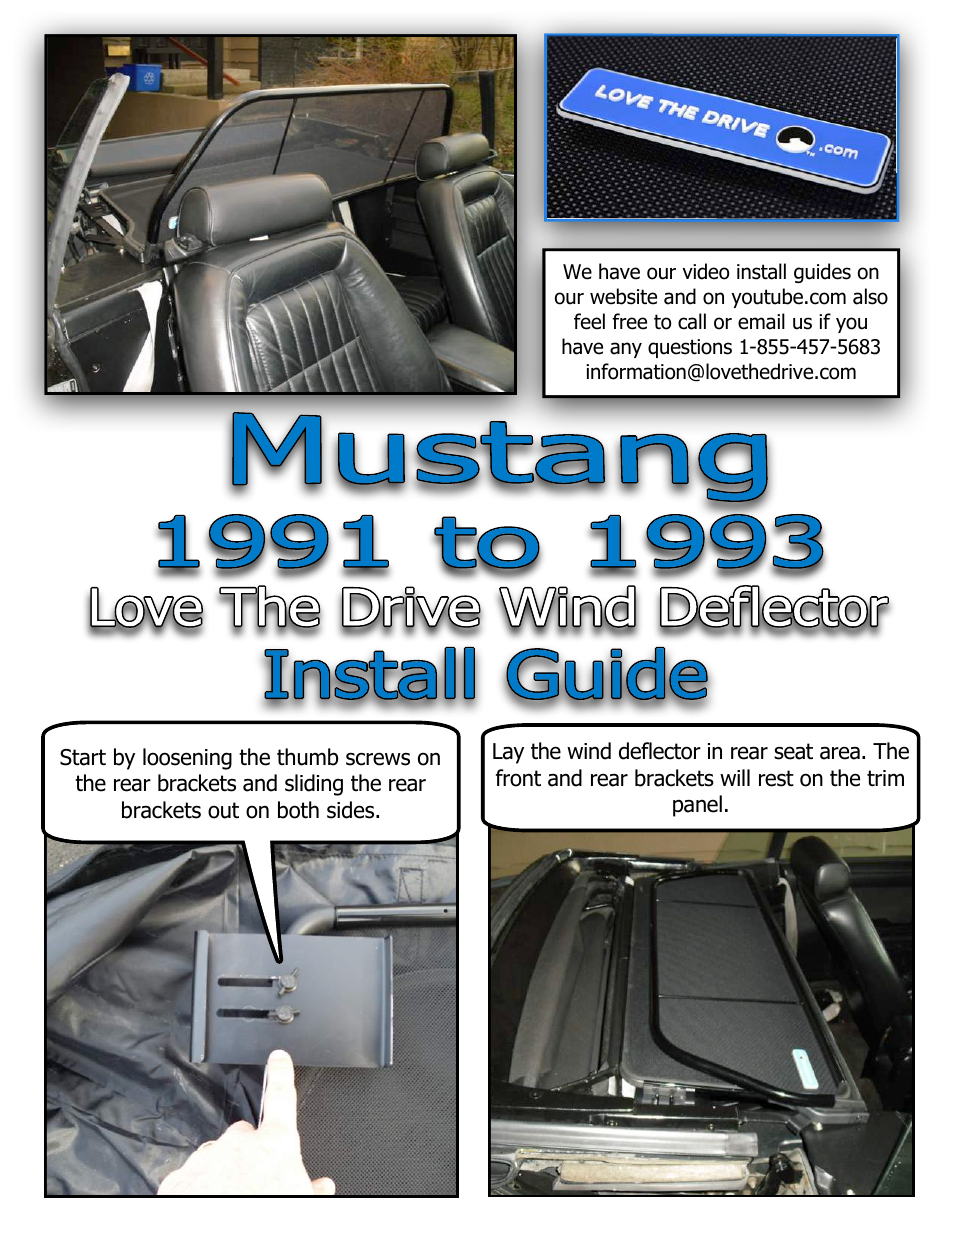 Mustang Wind Deflector 1990 to 1993